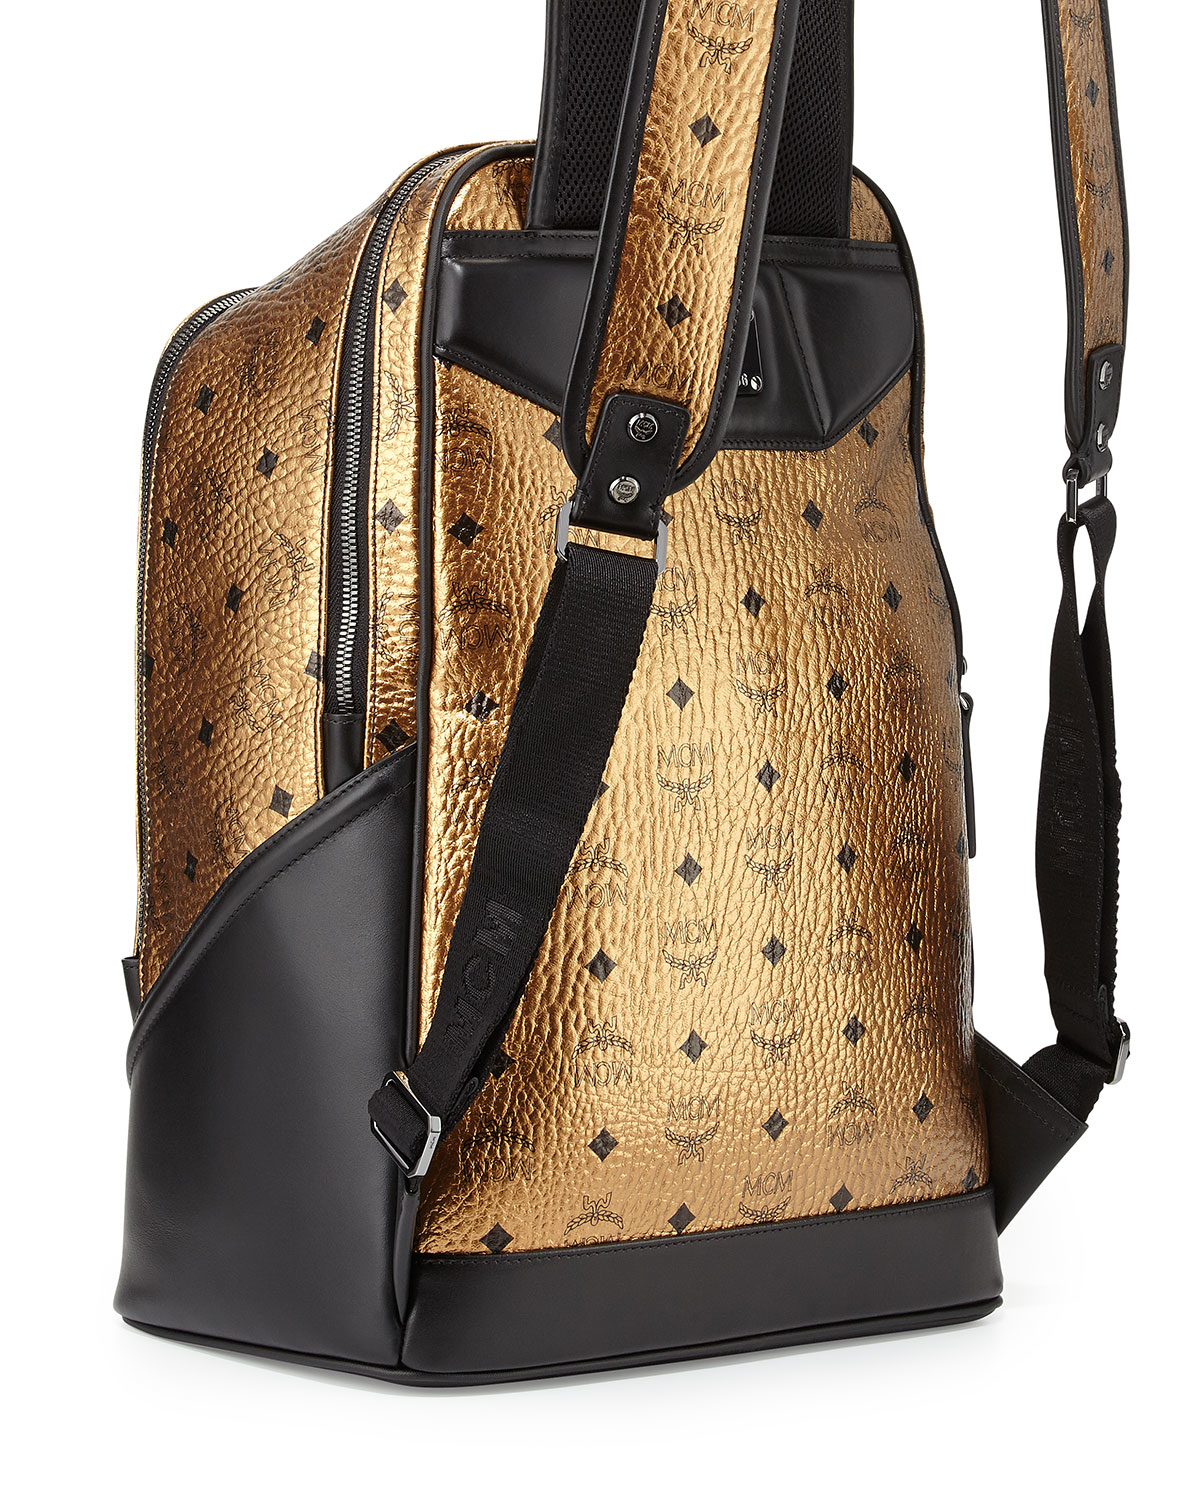 MCM Canvas Duke Visetos Backpack in Gold (Metallic) for Men - Lyst